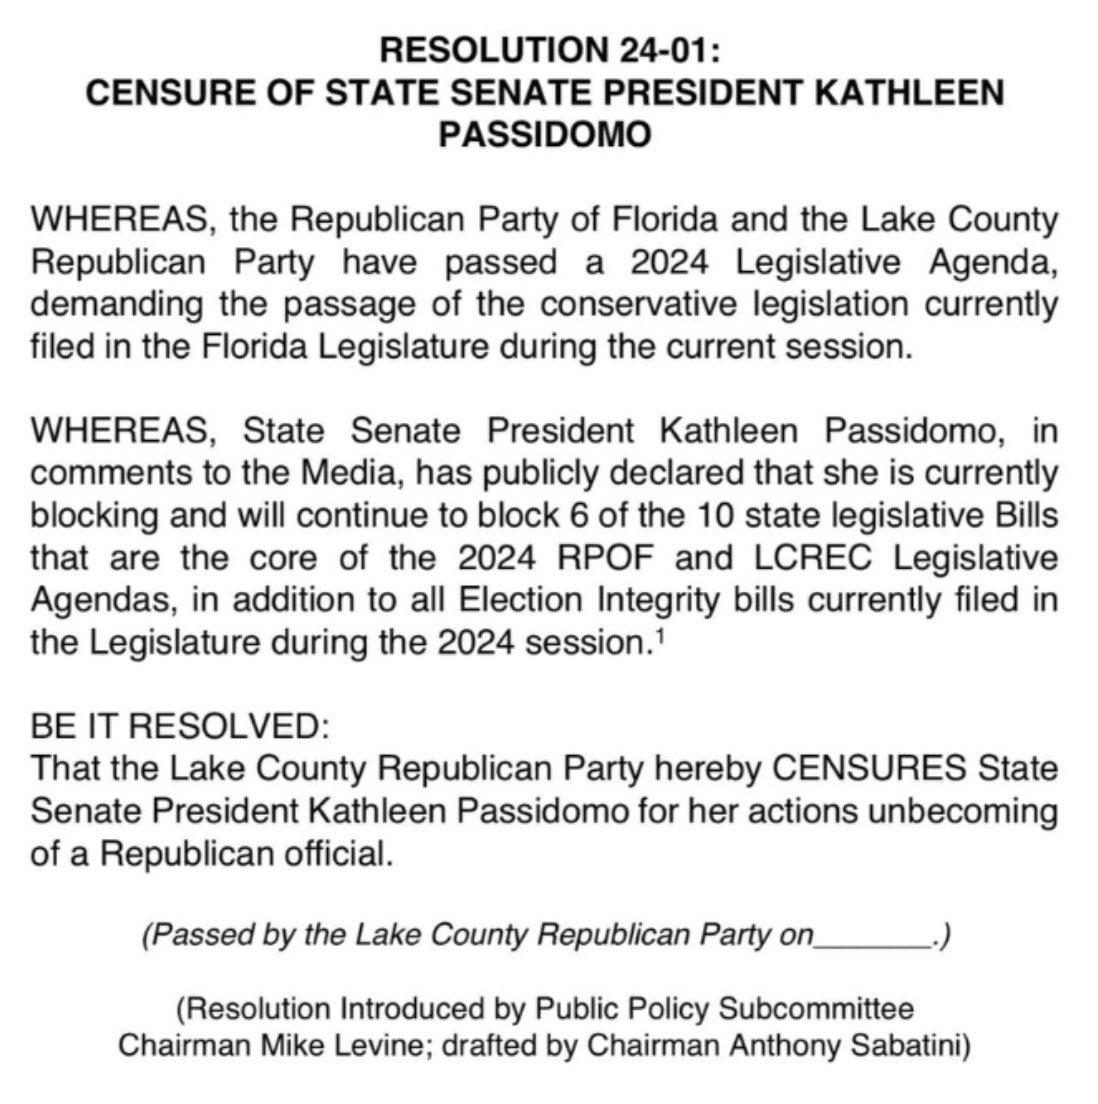 Lake County Republican Party Censures State Senate President Kathleen Passidomo